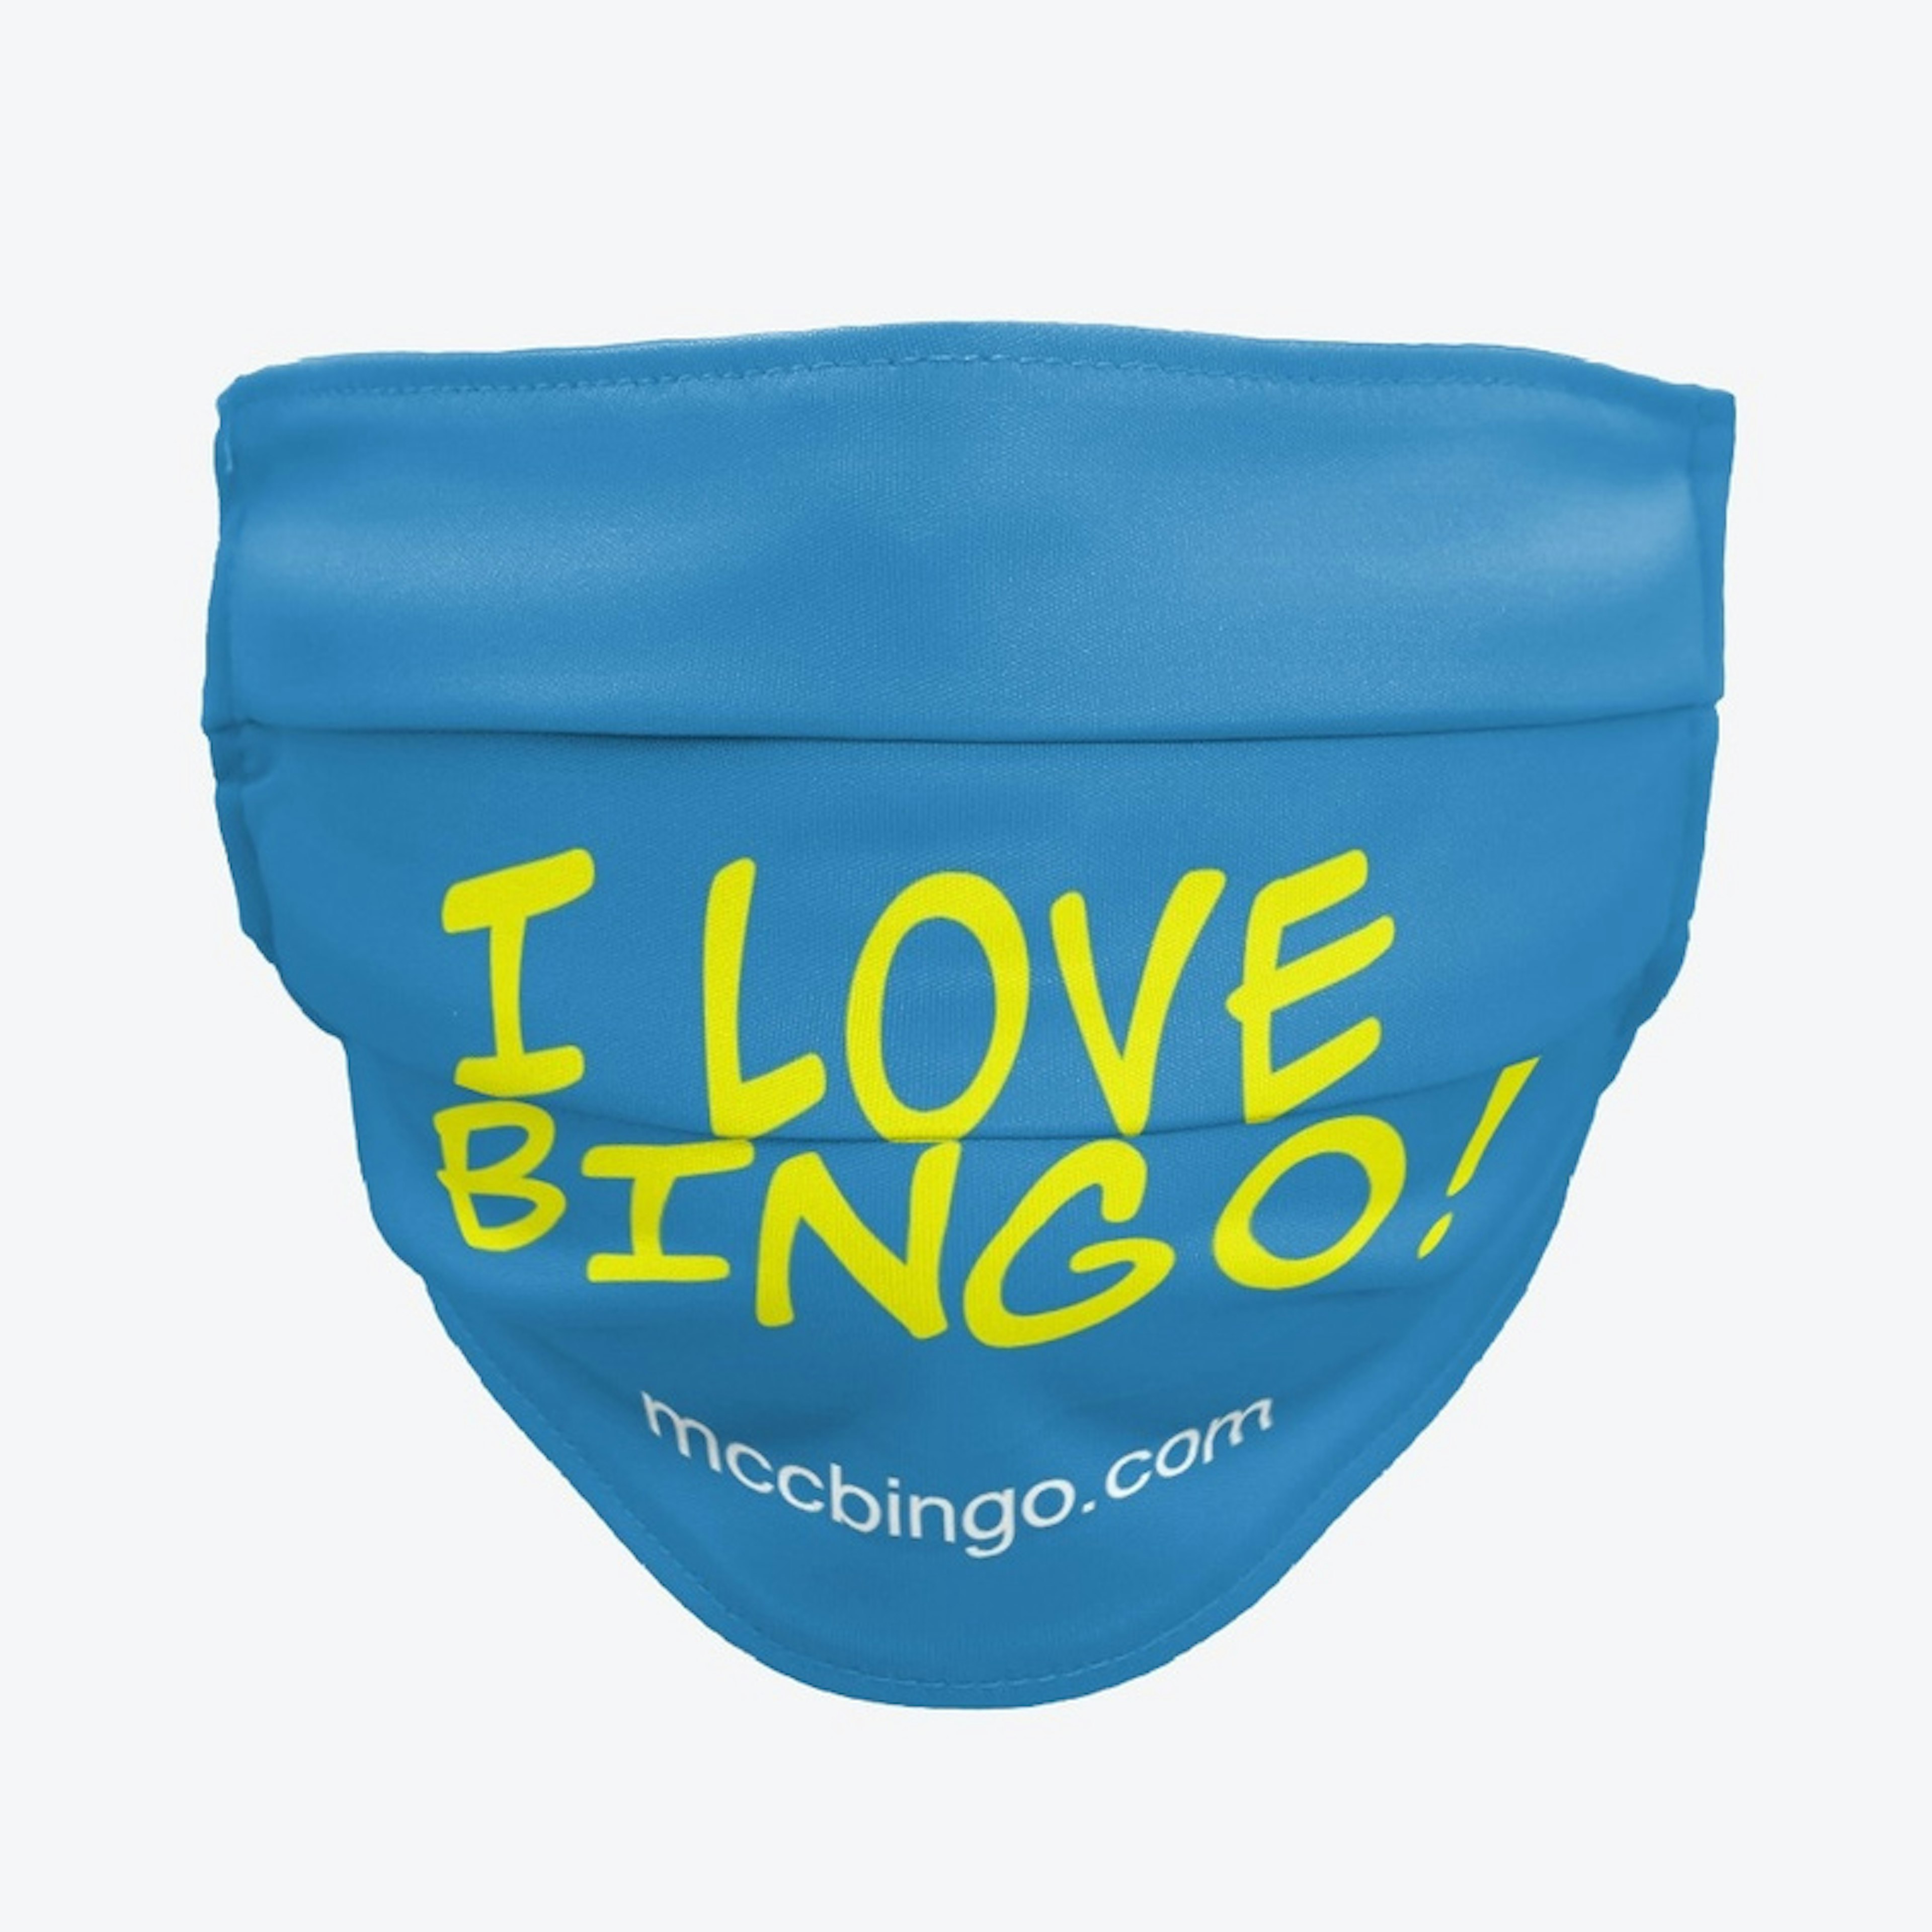 I  LOVE BINGO!